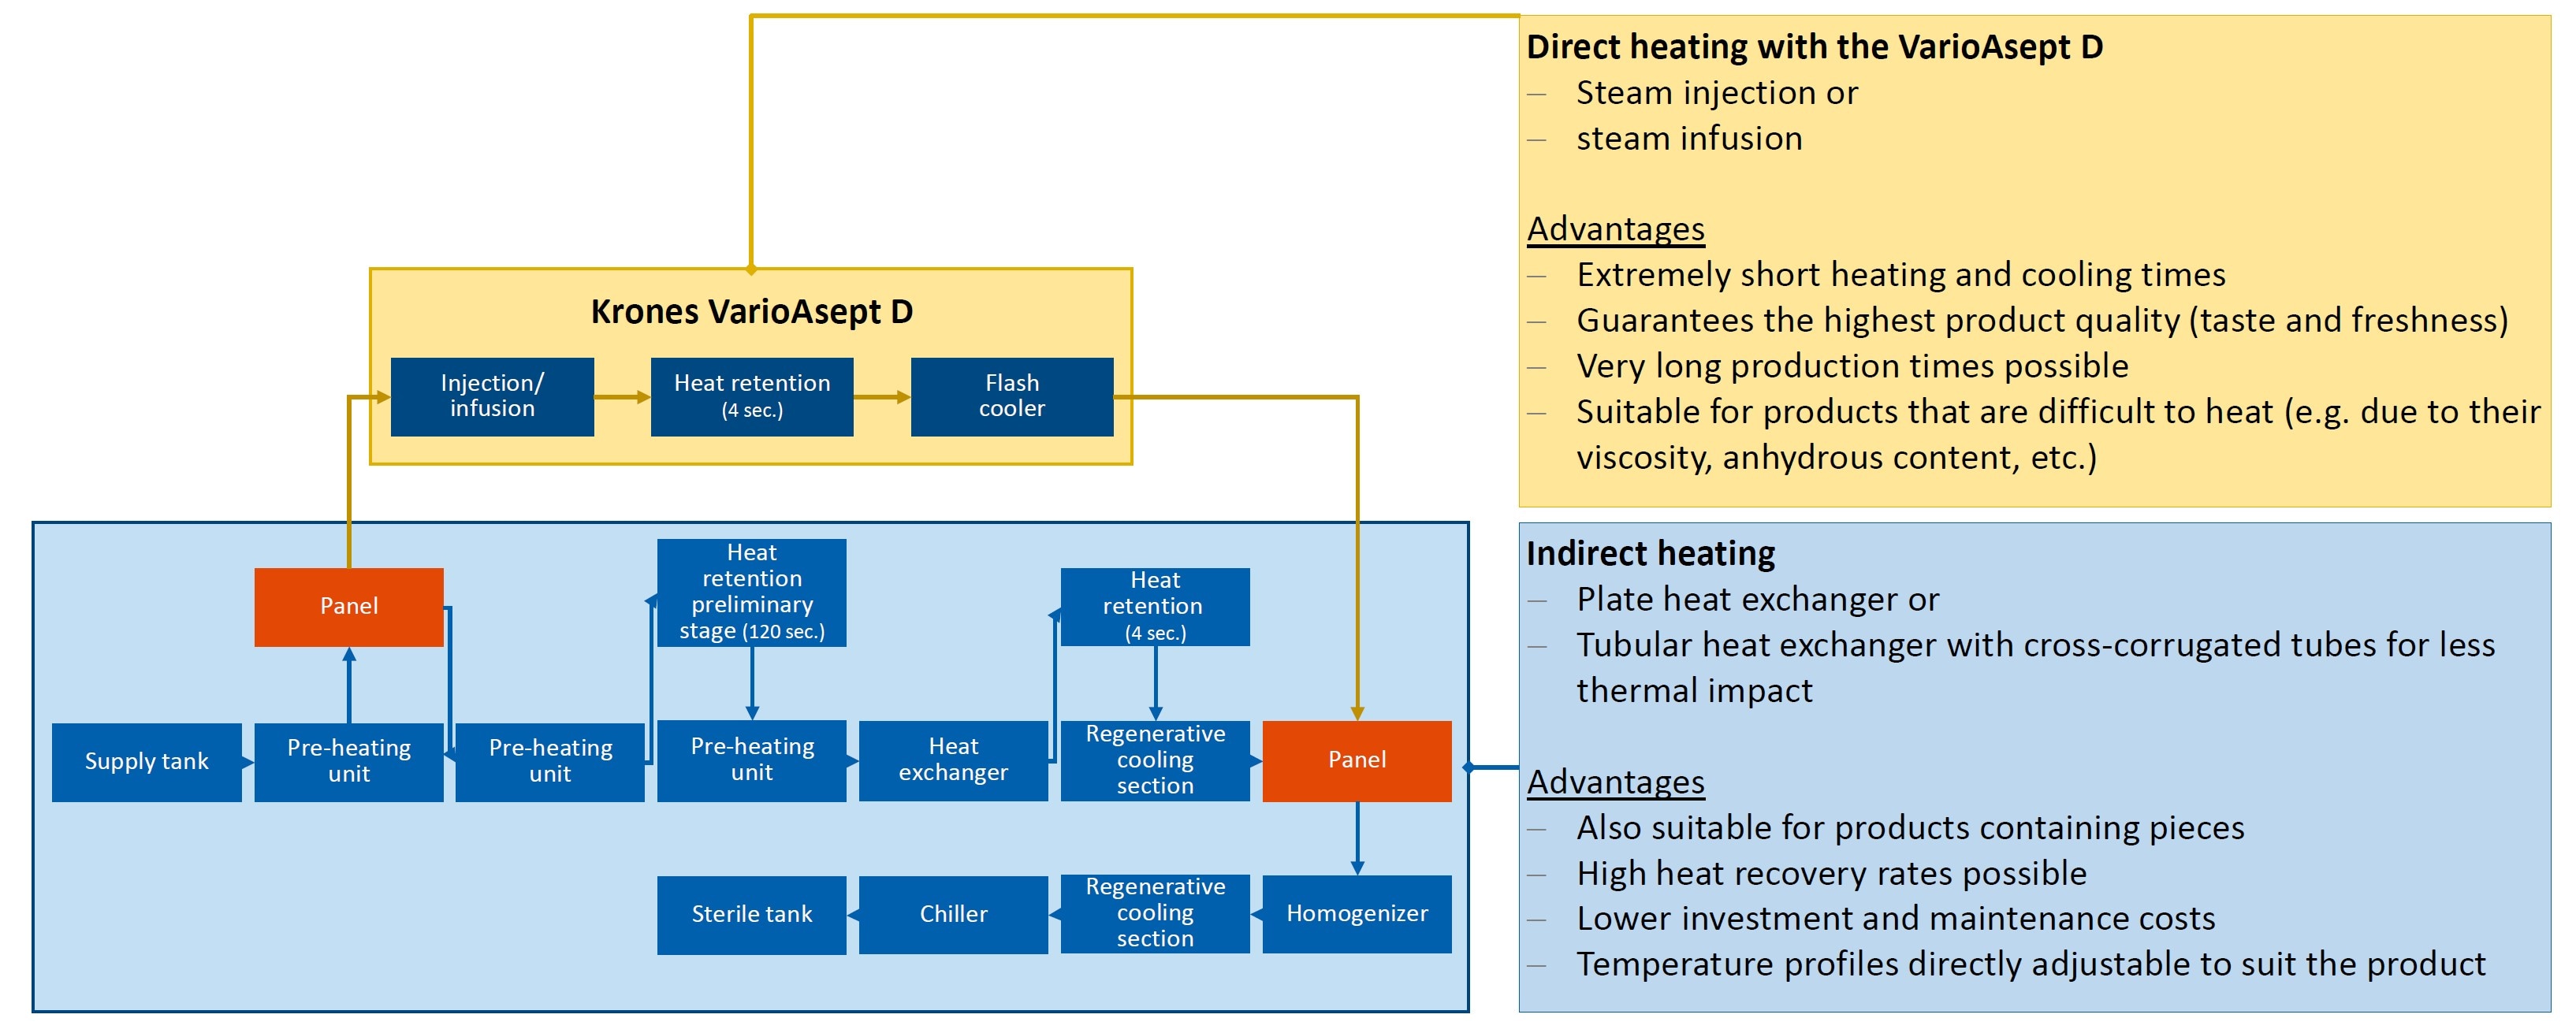 6. Flexible heating options